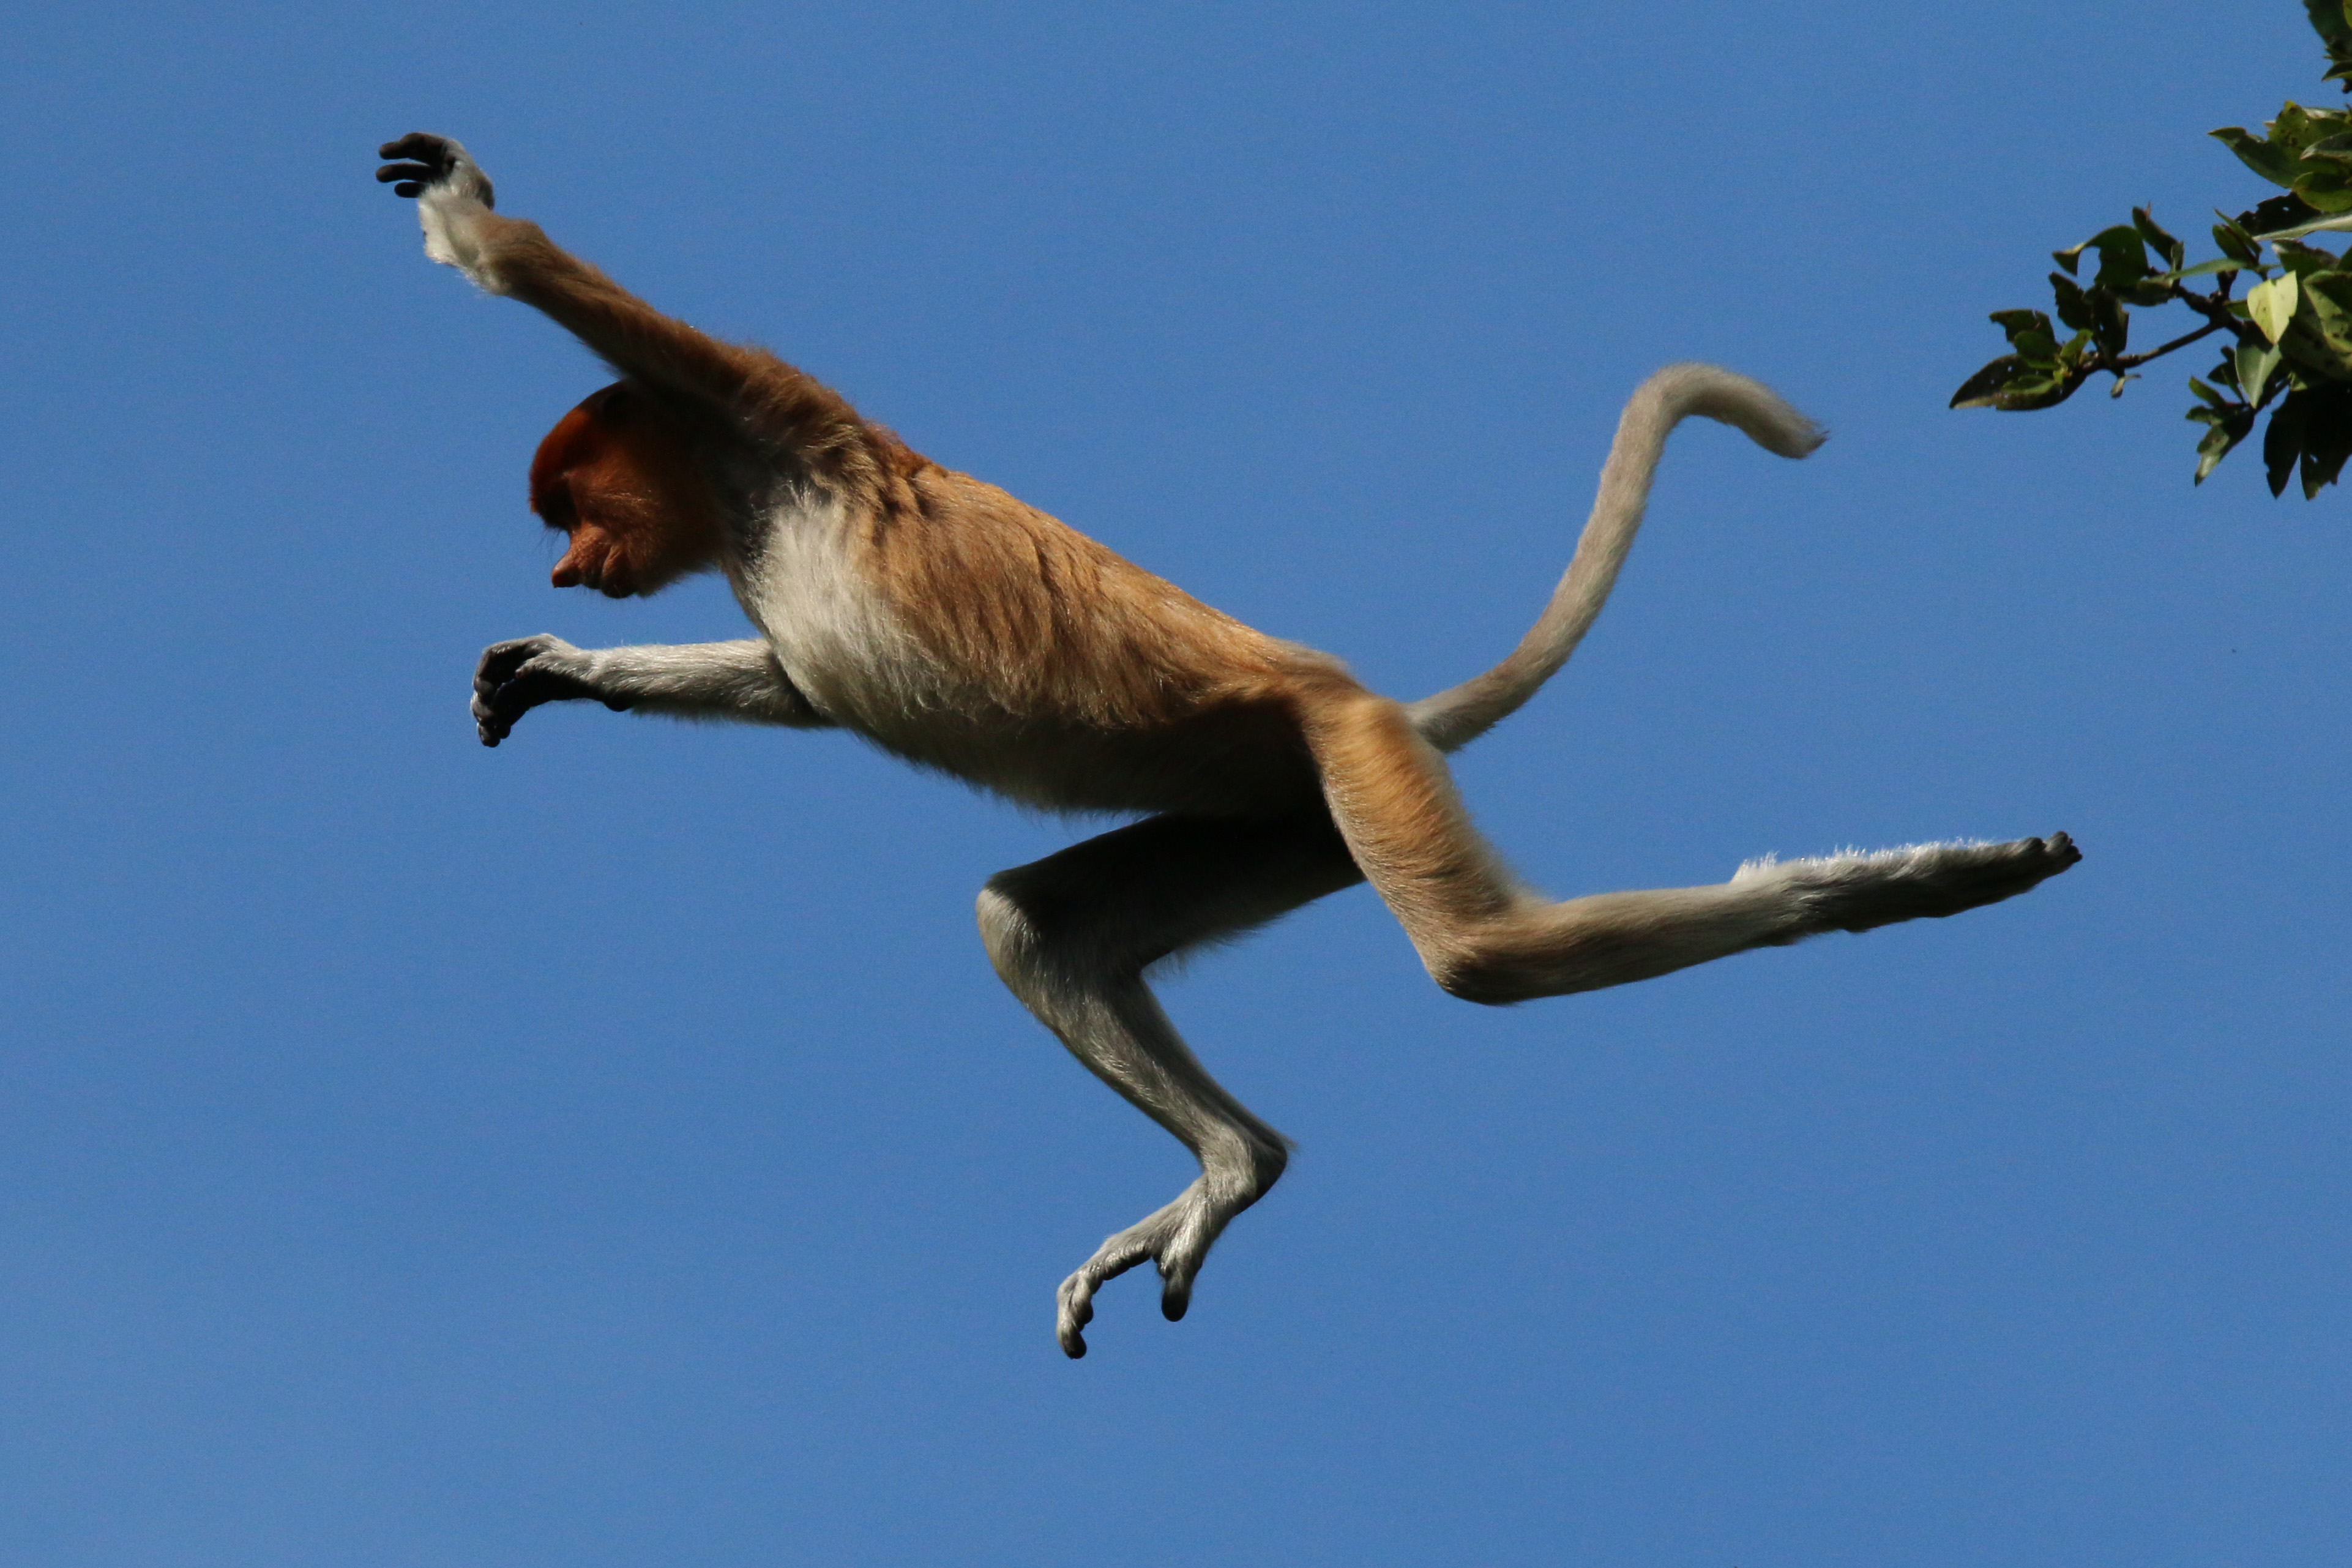 File:Proboscis monkey (Nasalis larvatus) jumping.jpg - Wikimedia Commons